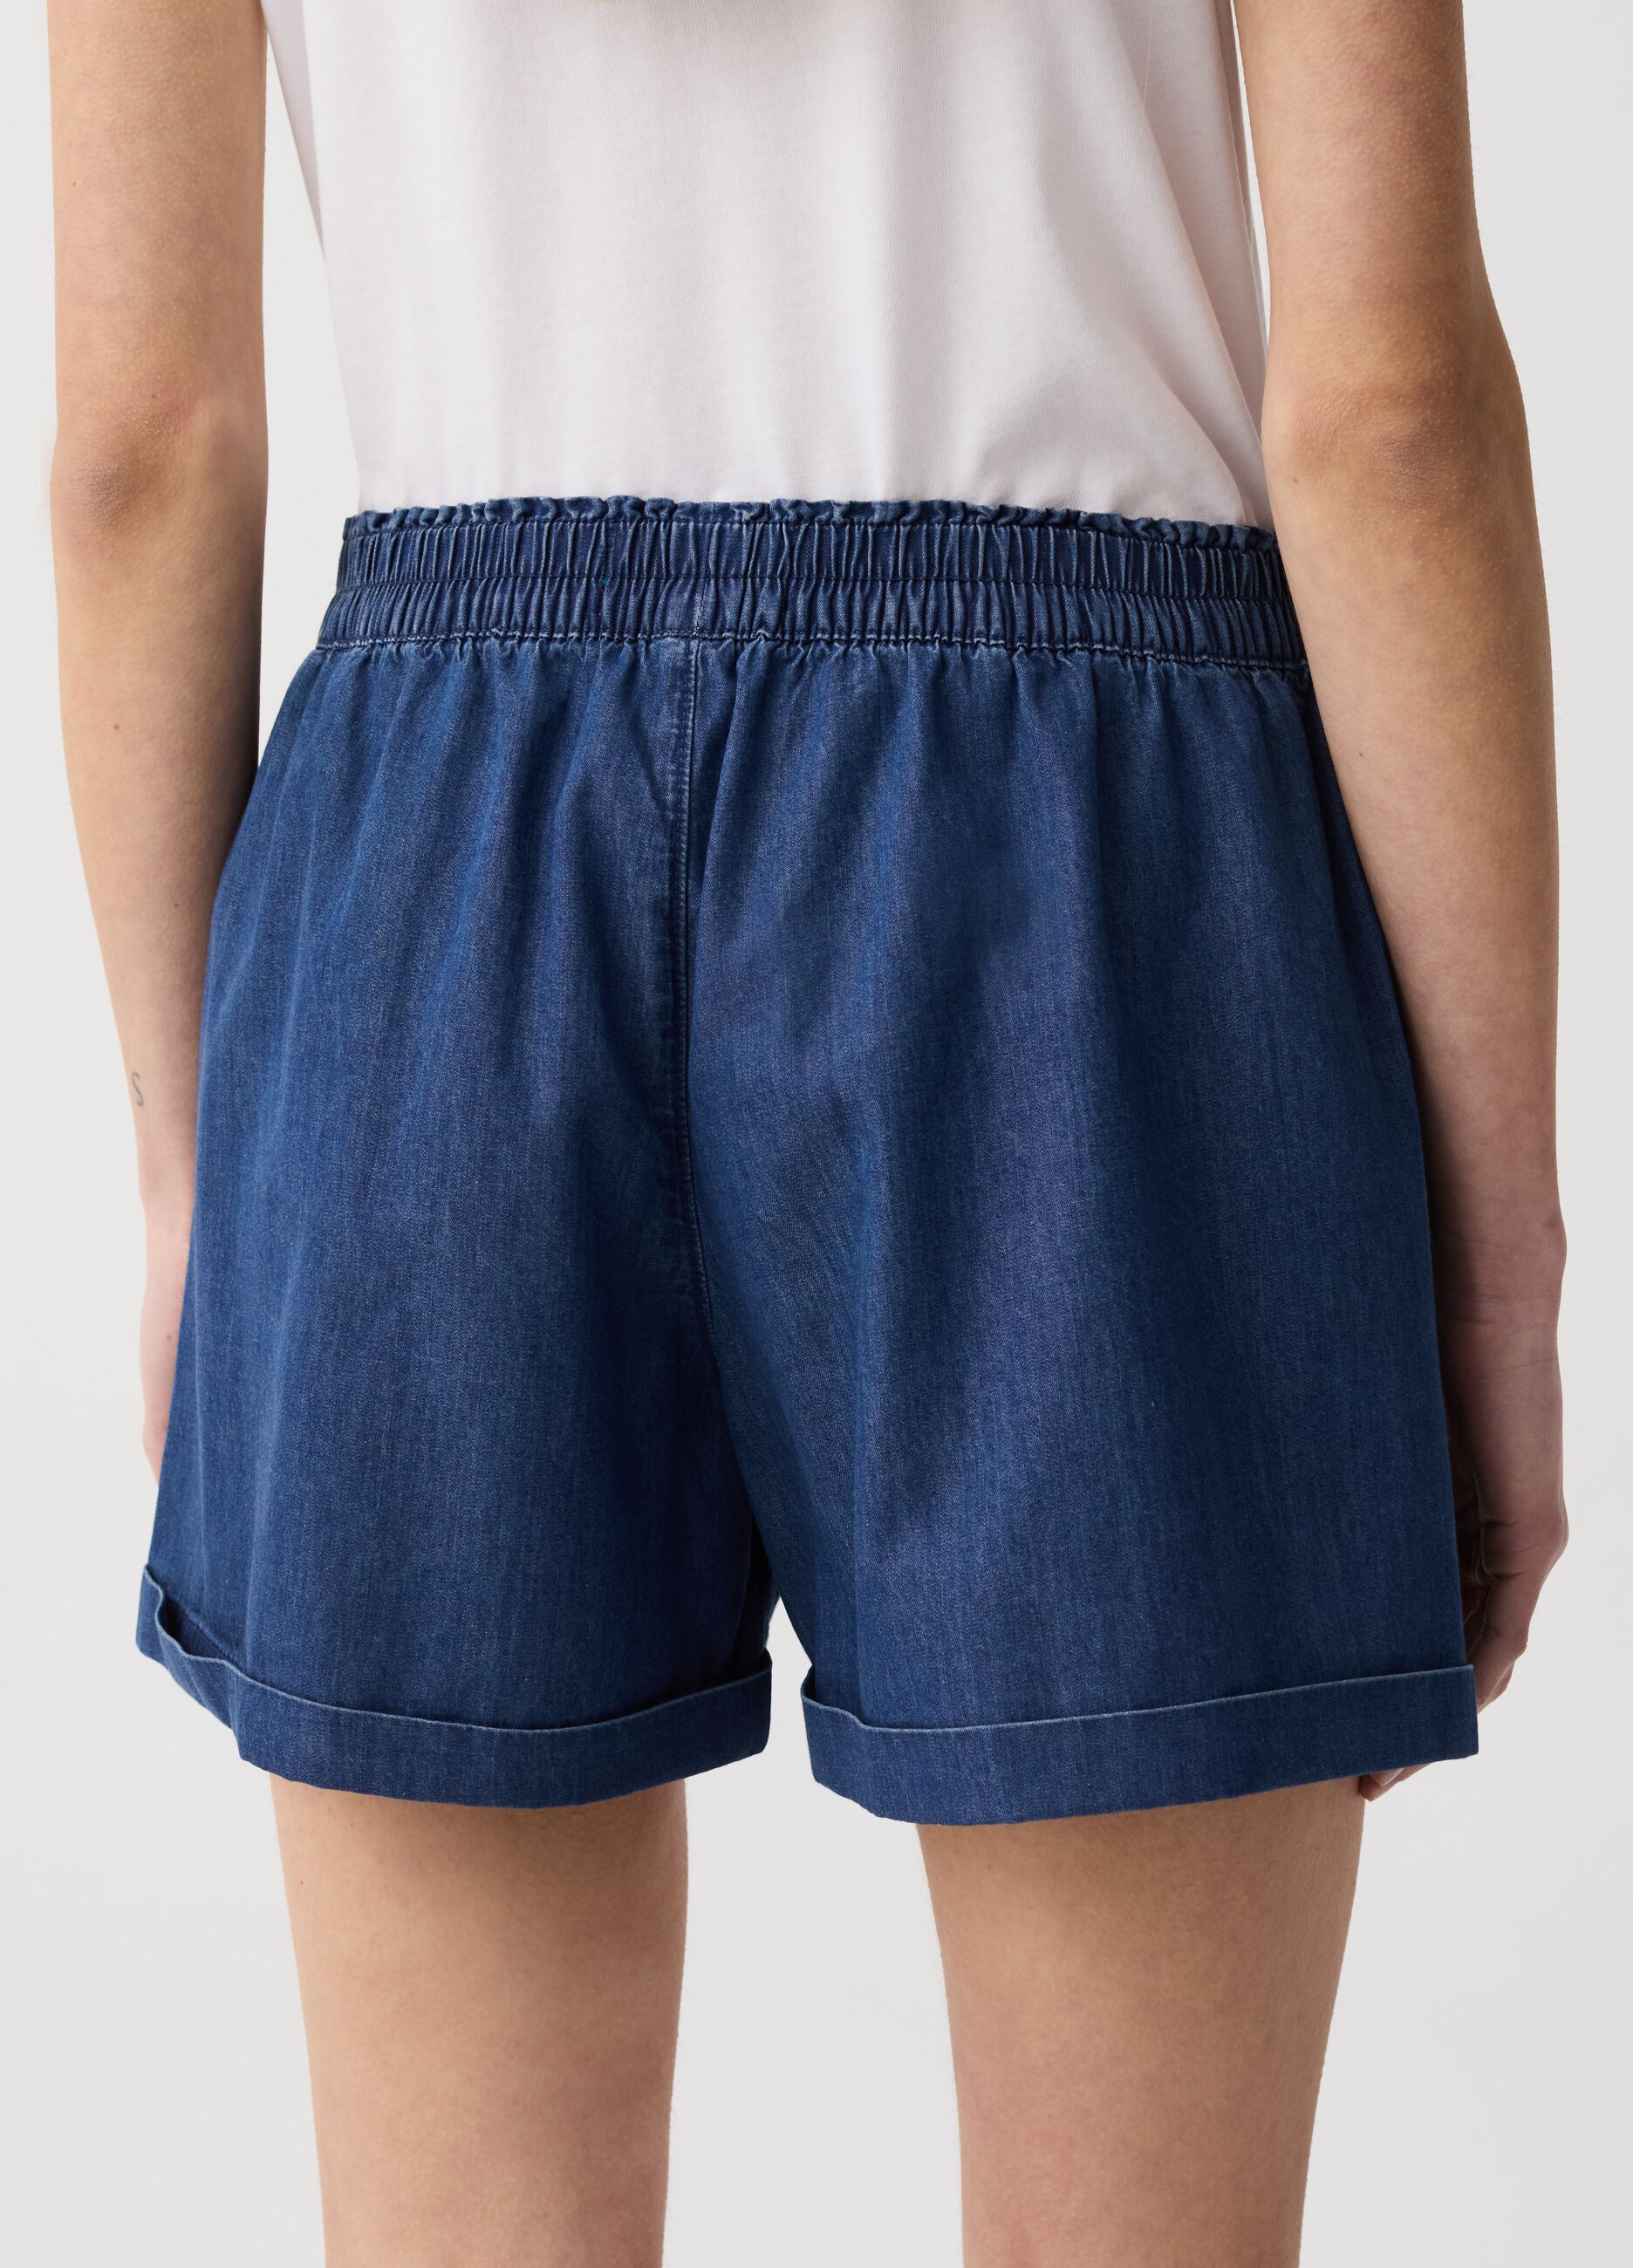 Fluid denim shorts with pockets